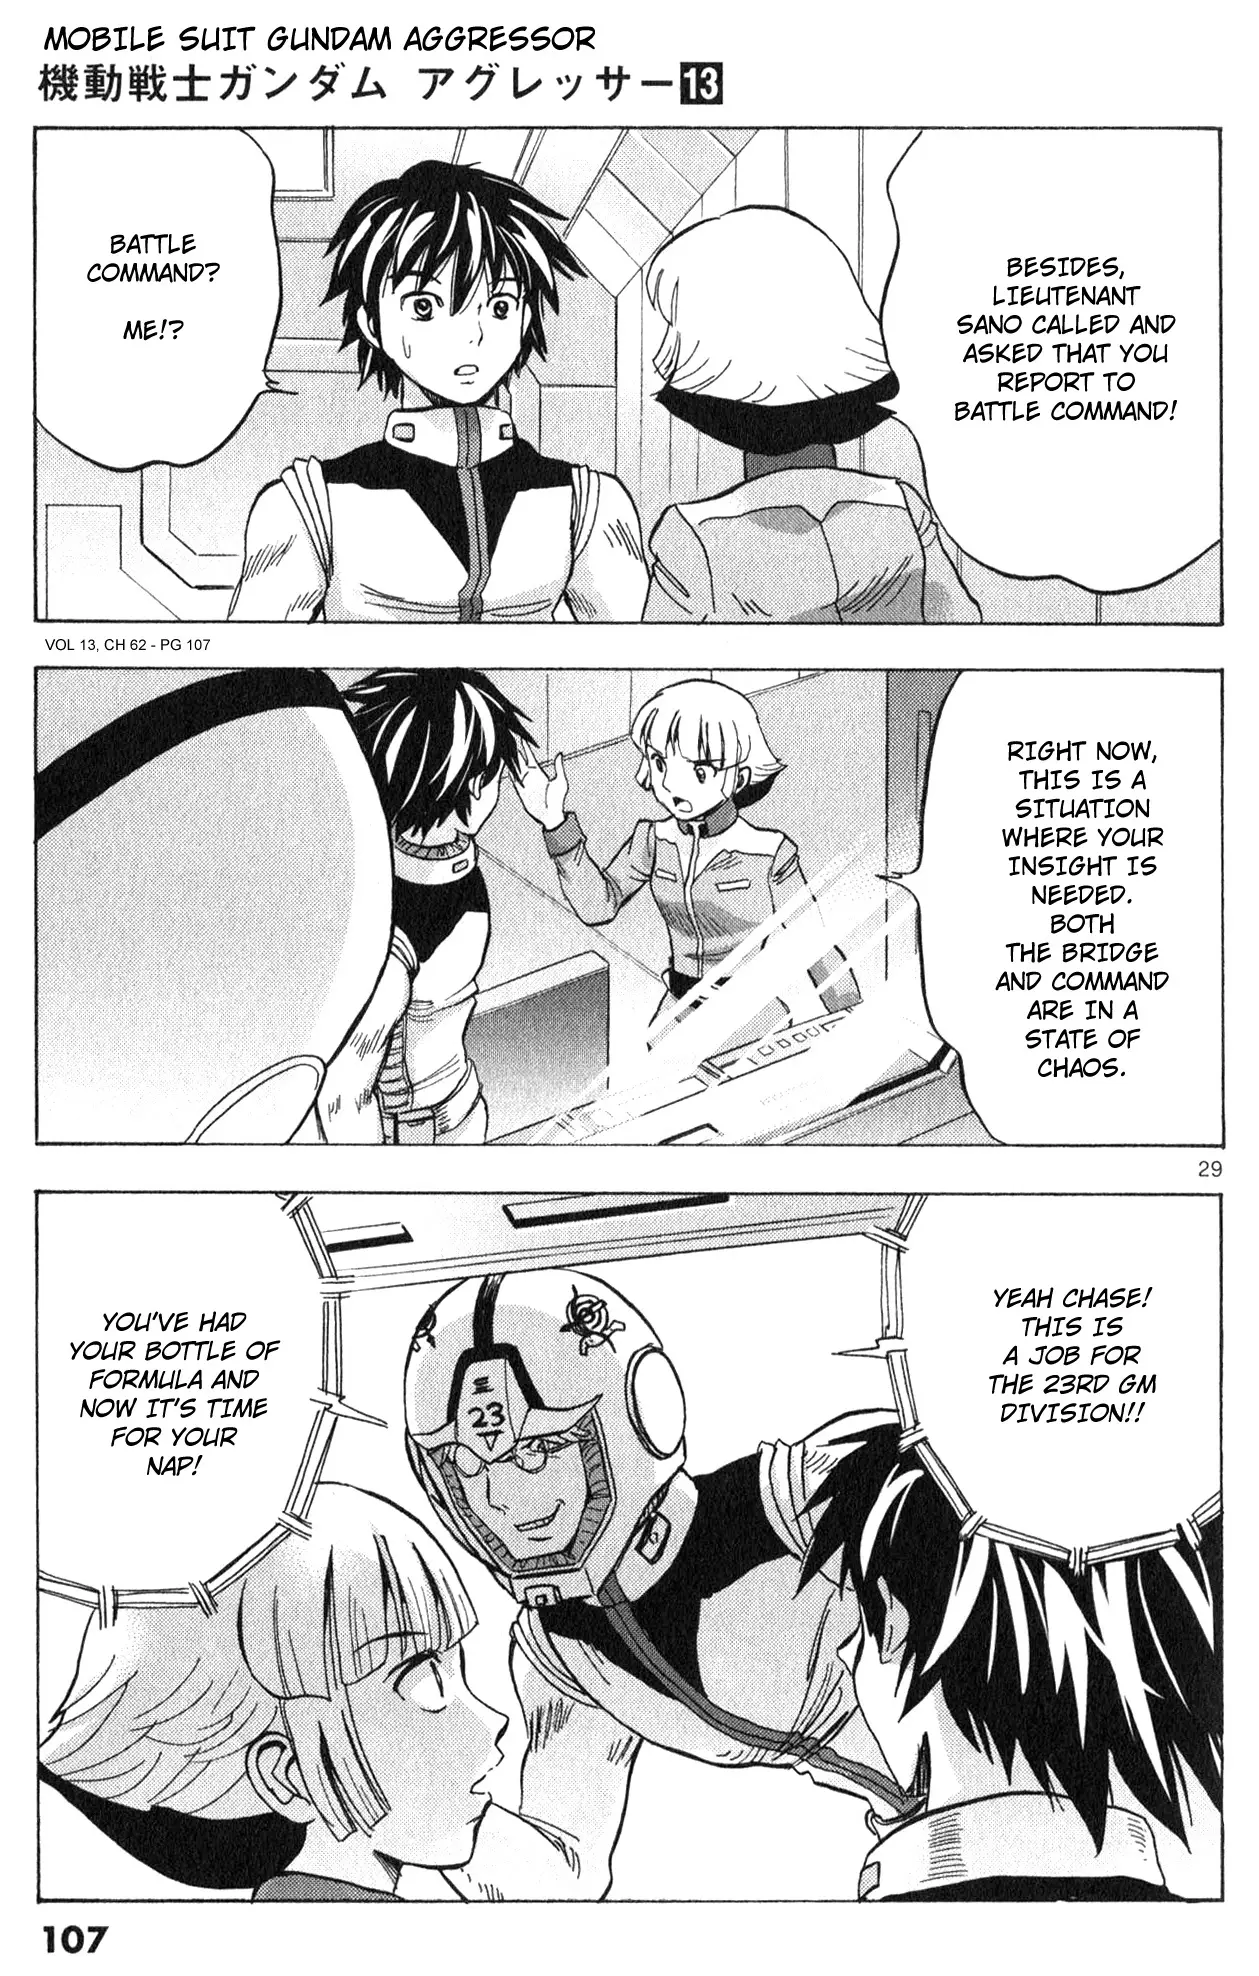 Mobile Suit Gundam Aggressor - 62 page 28-ce4e8514